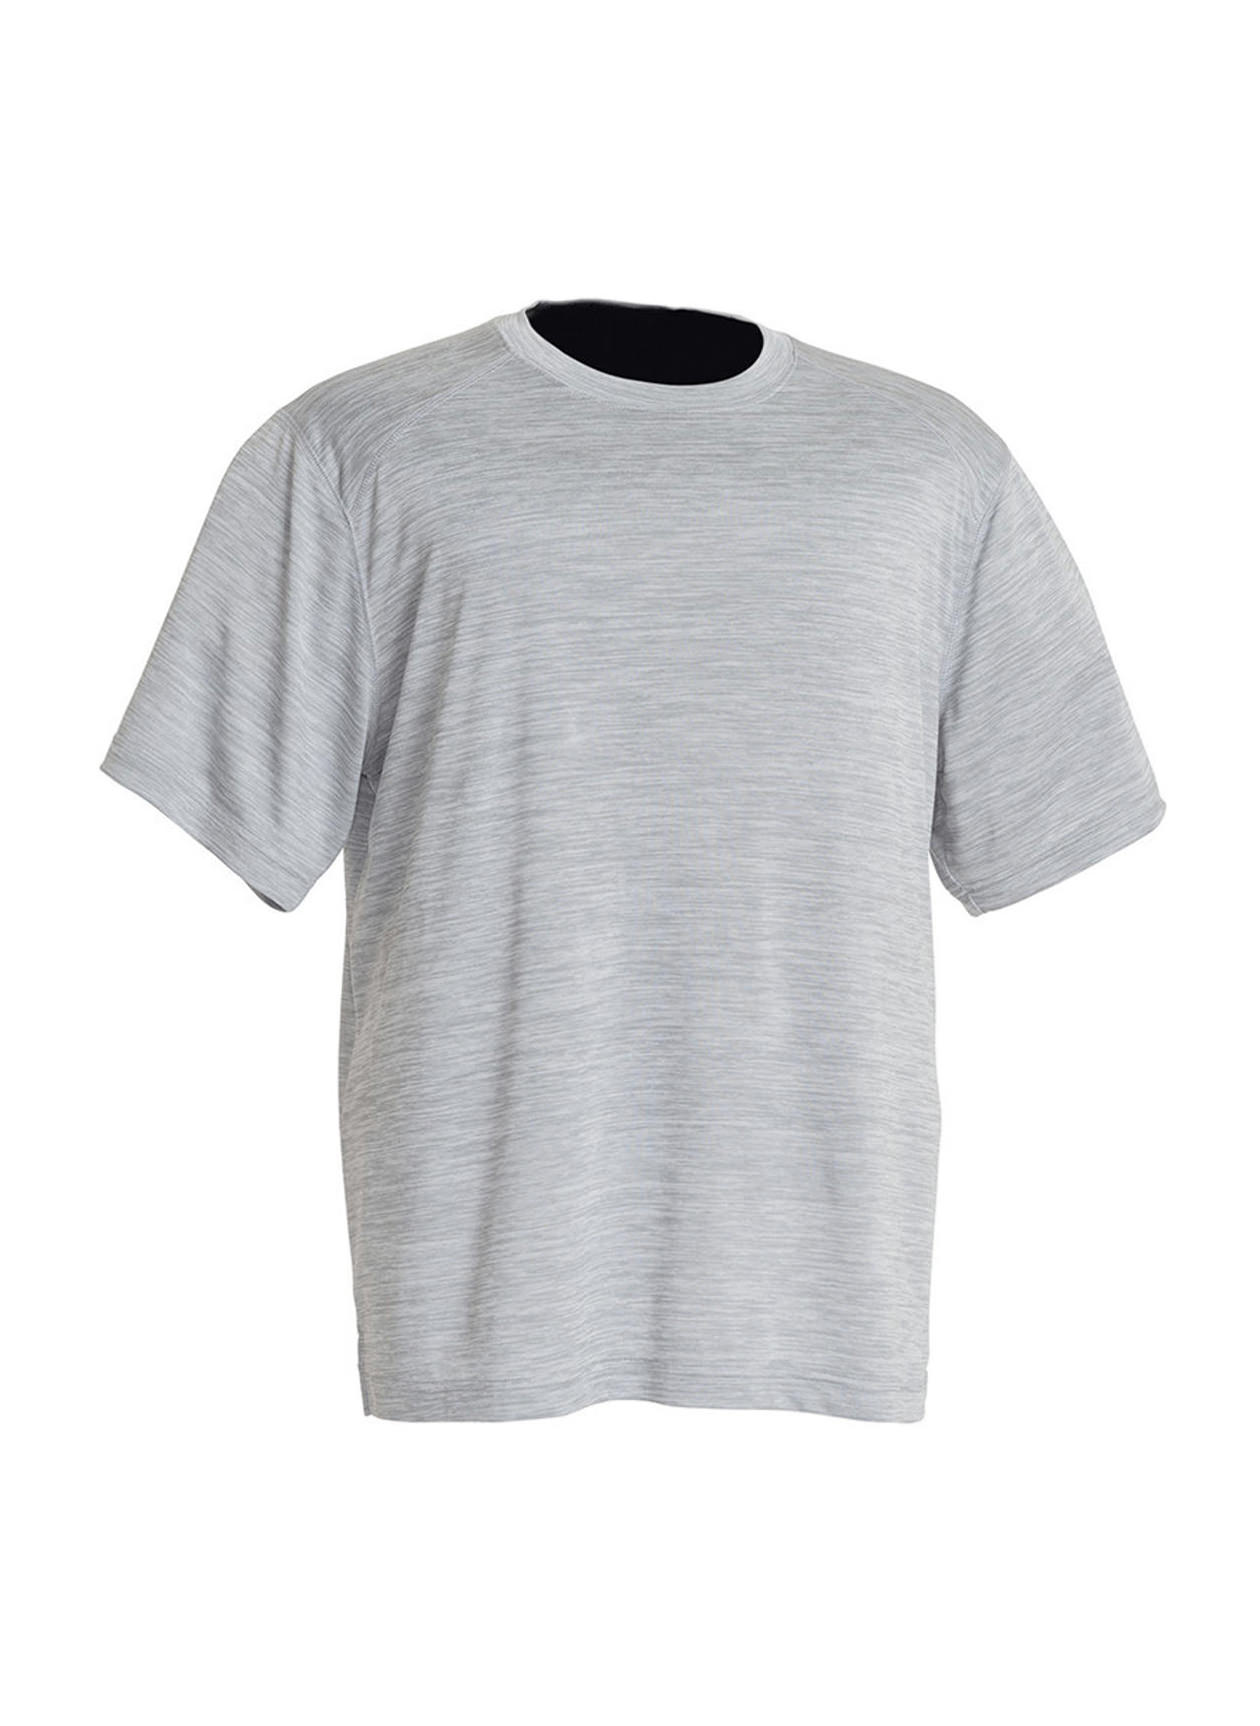 Charles River Men's Grey Performance T-Shirt